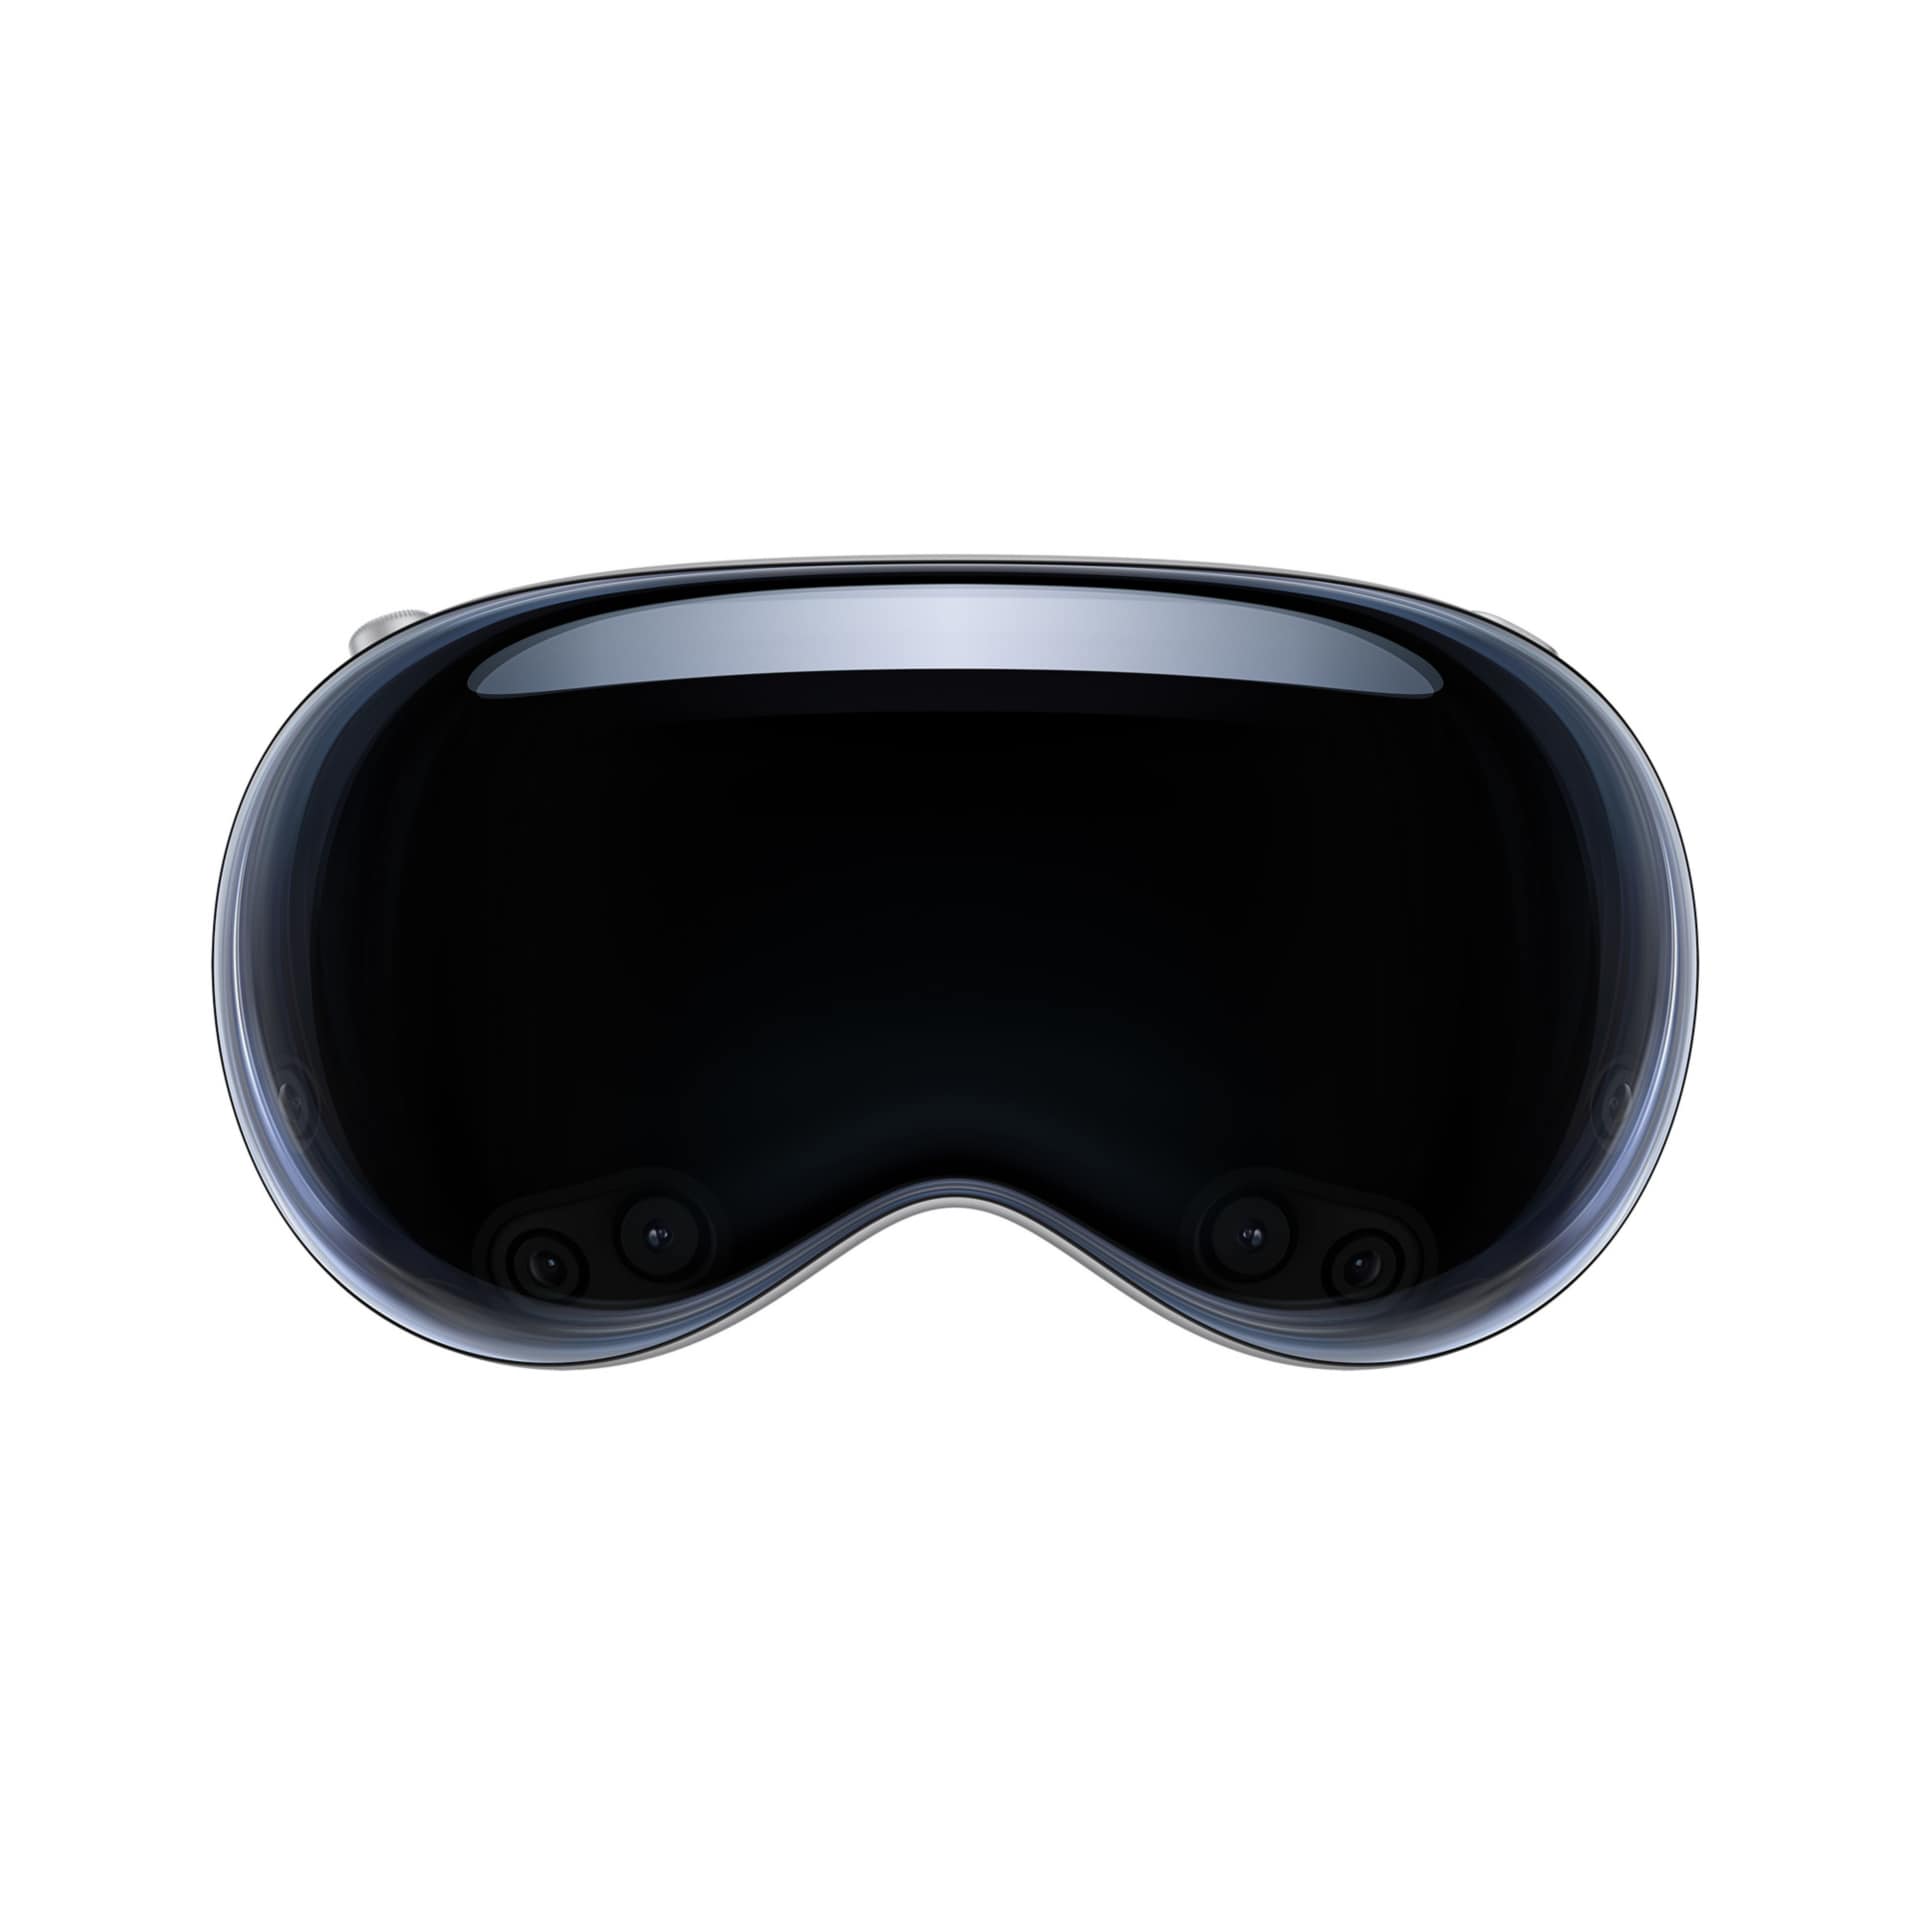 Apple Vision Pro - 1 TB Storage - Headband: M - Light Seal: 26N - VR Headset